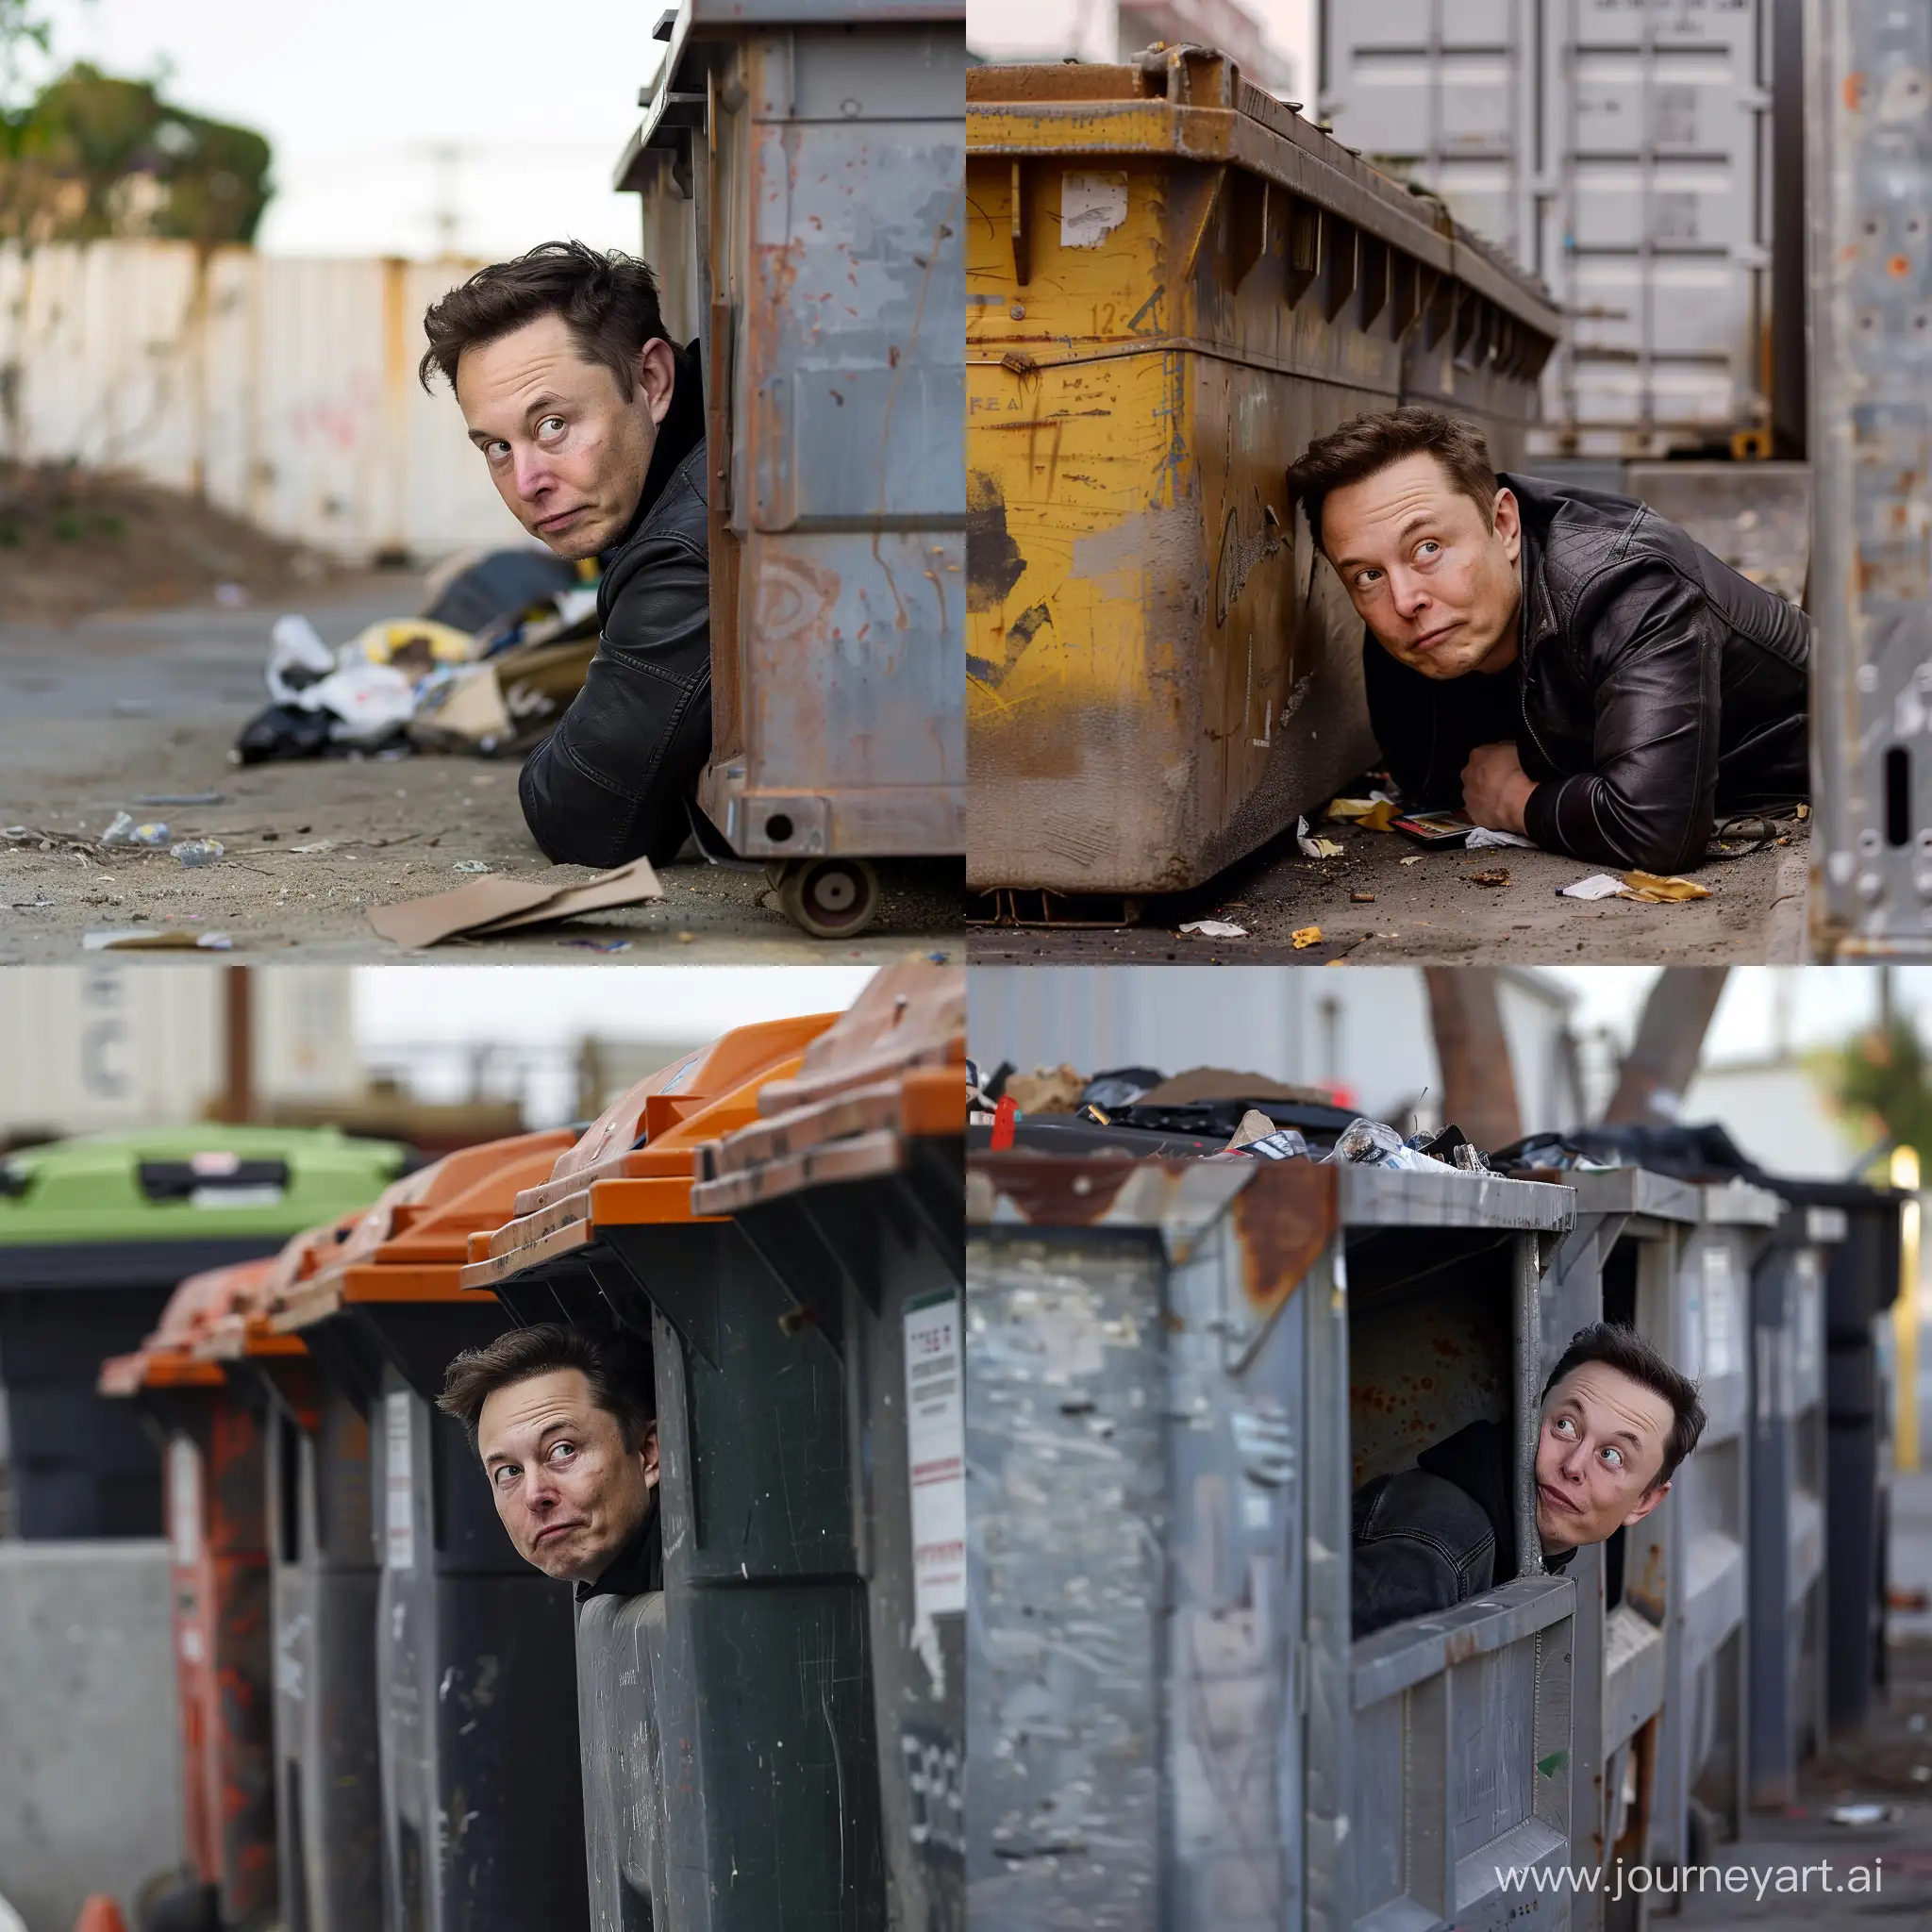 Elon-Musk-Curiously-Observing-Surroundings-Near-Dumpster